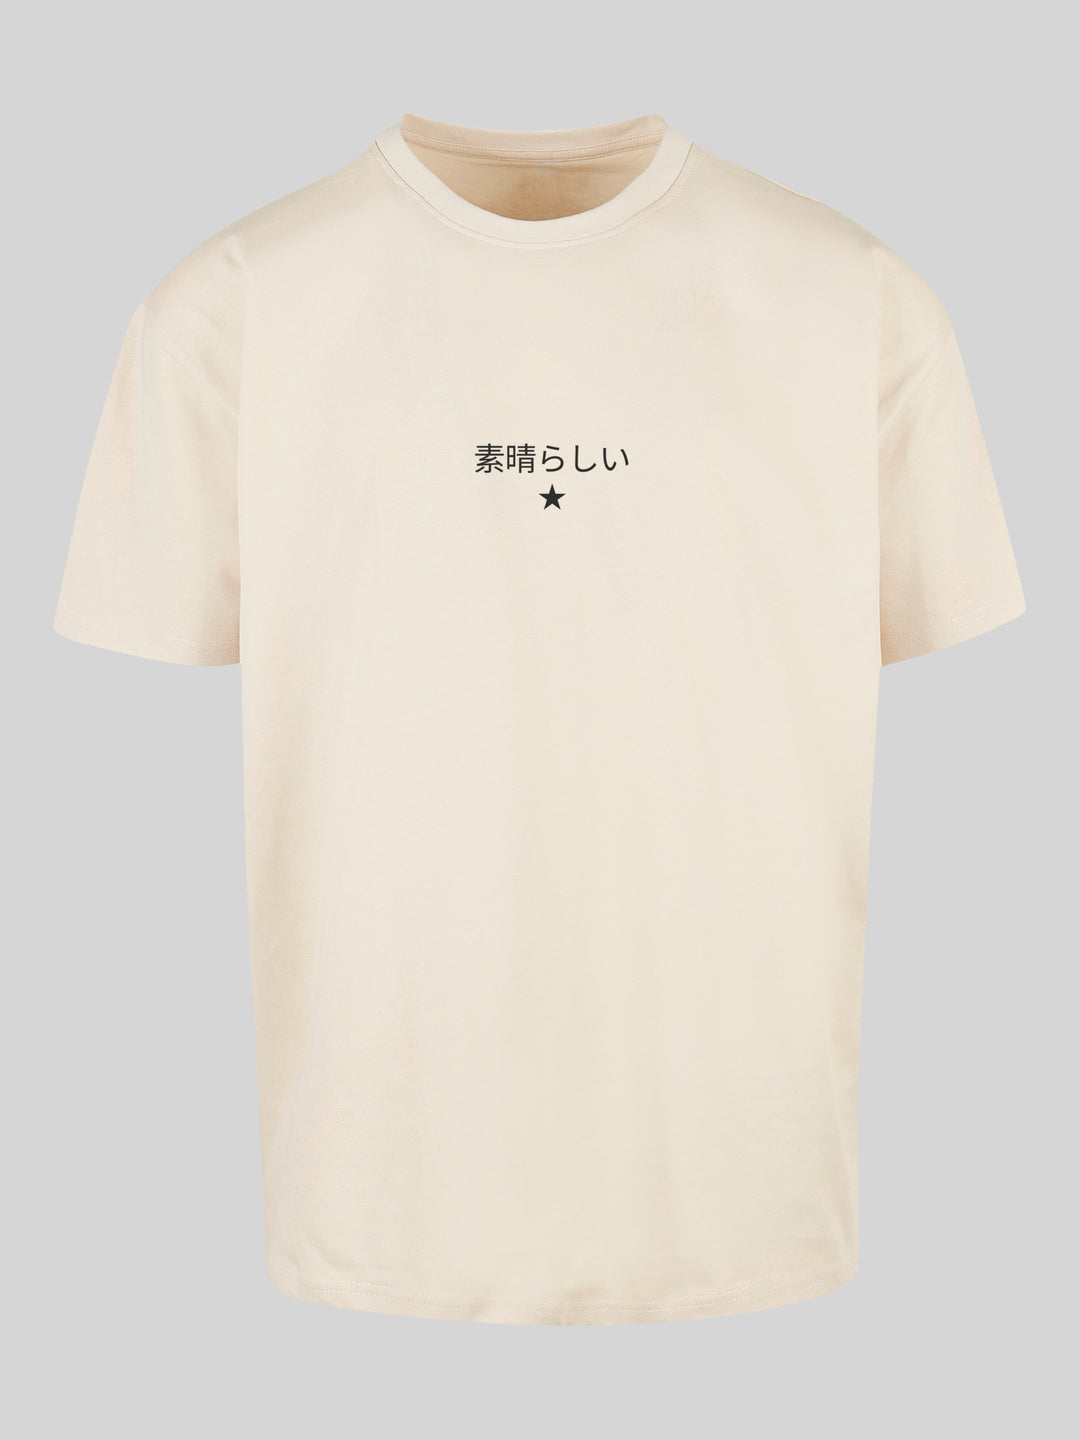 Kanagawa Welle | Oversize Herren T-Shirt